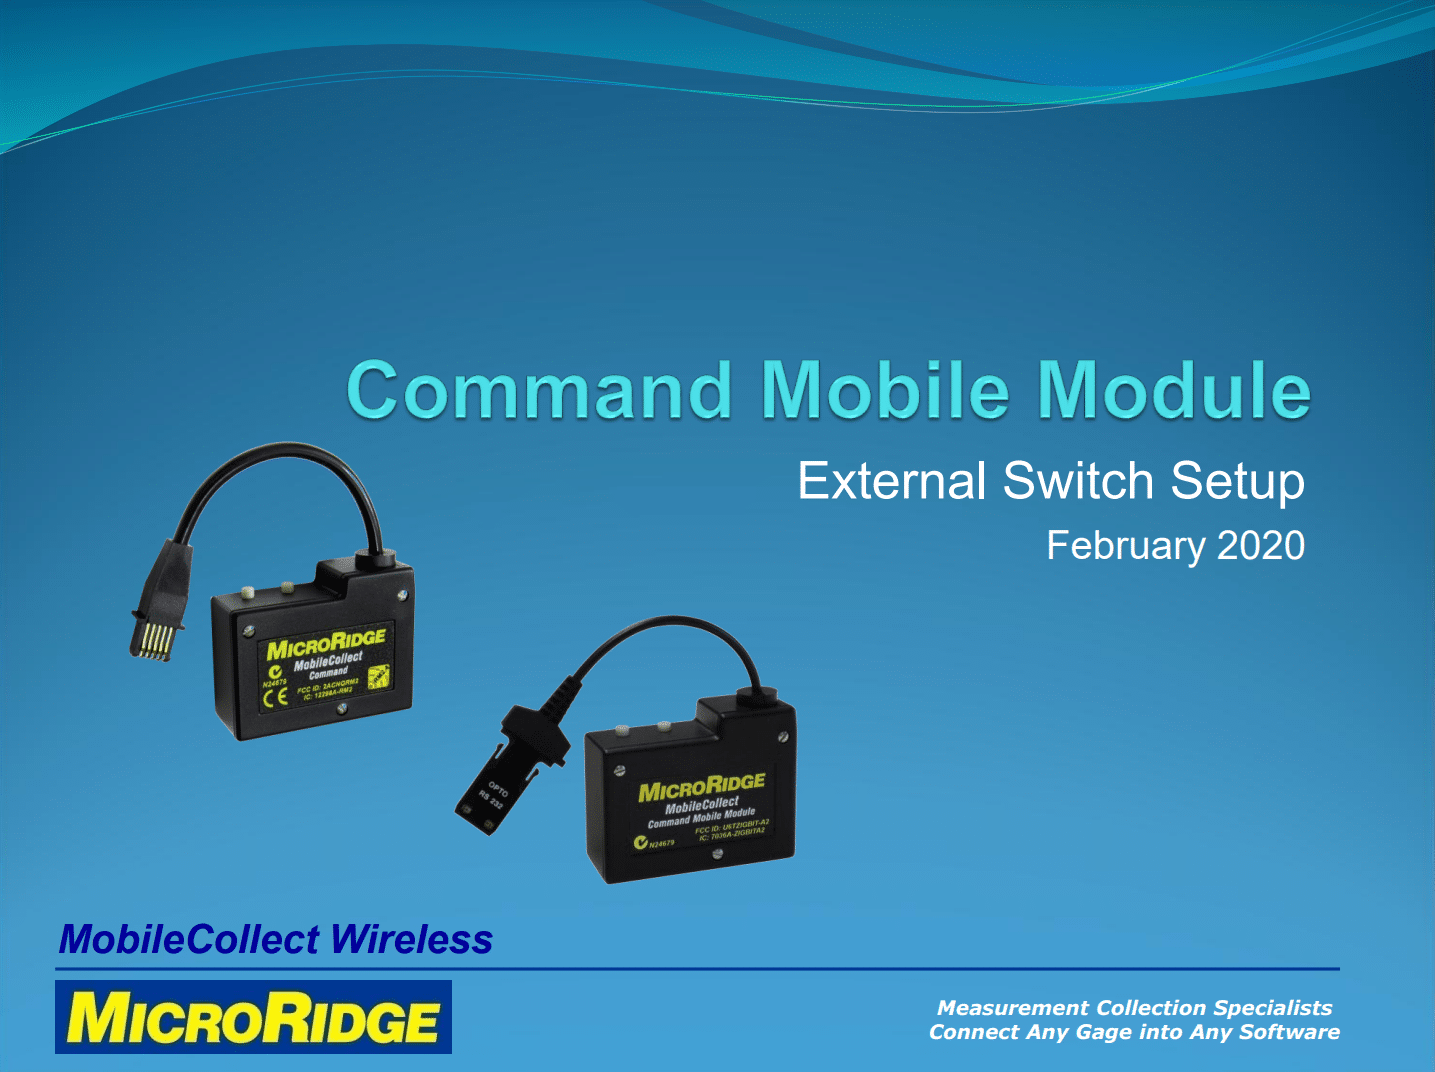 Command Mobile Module External Switch Setup